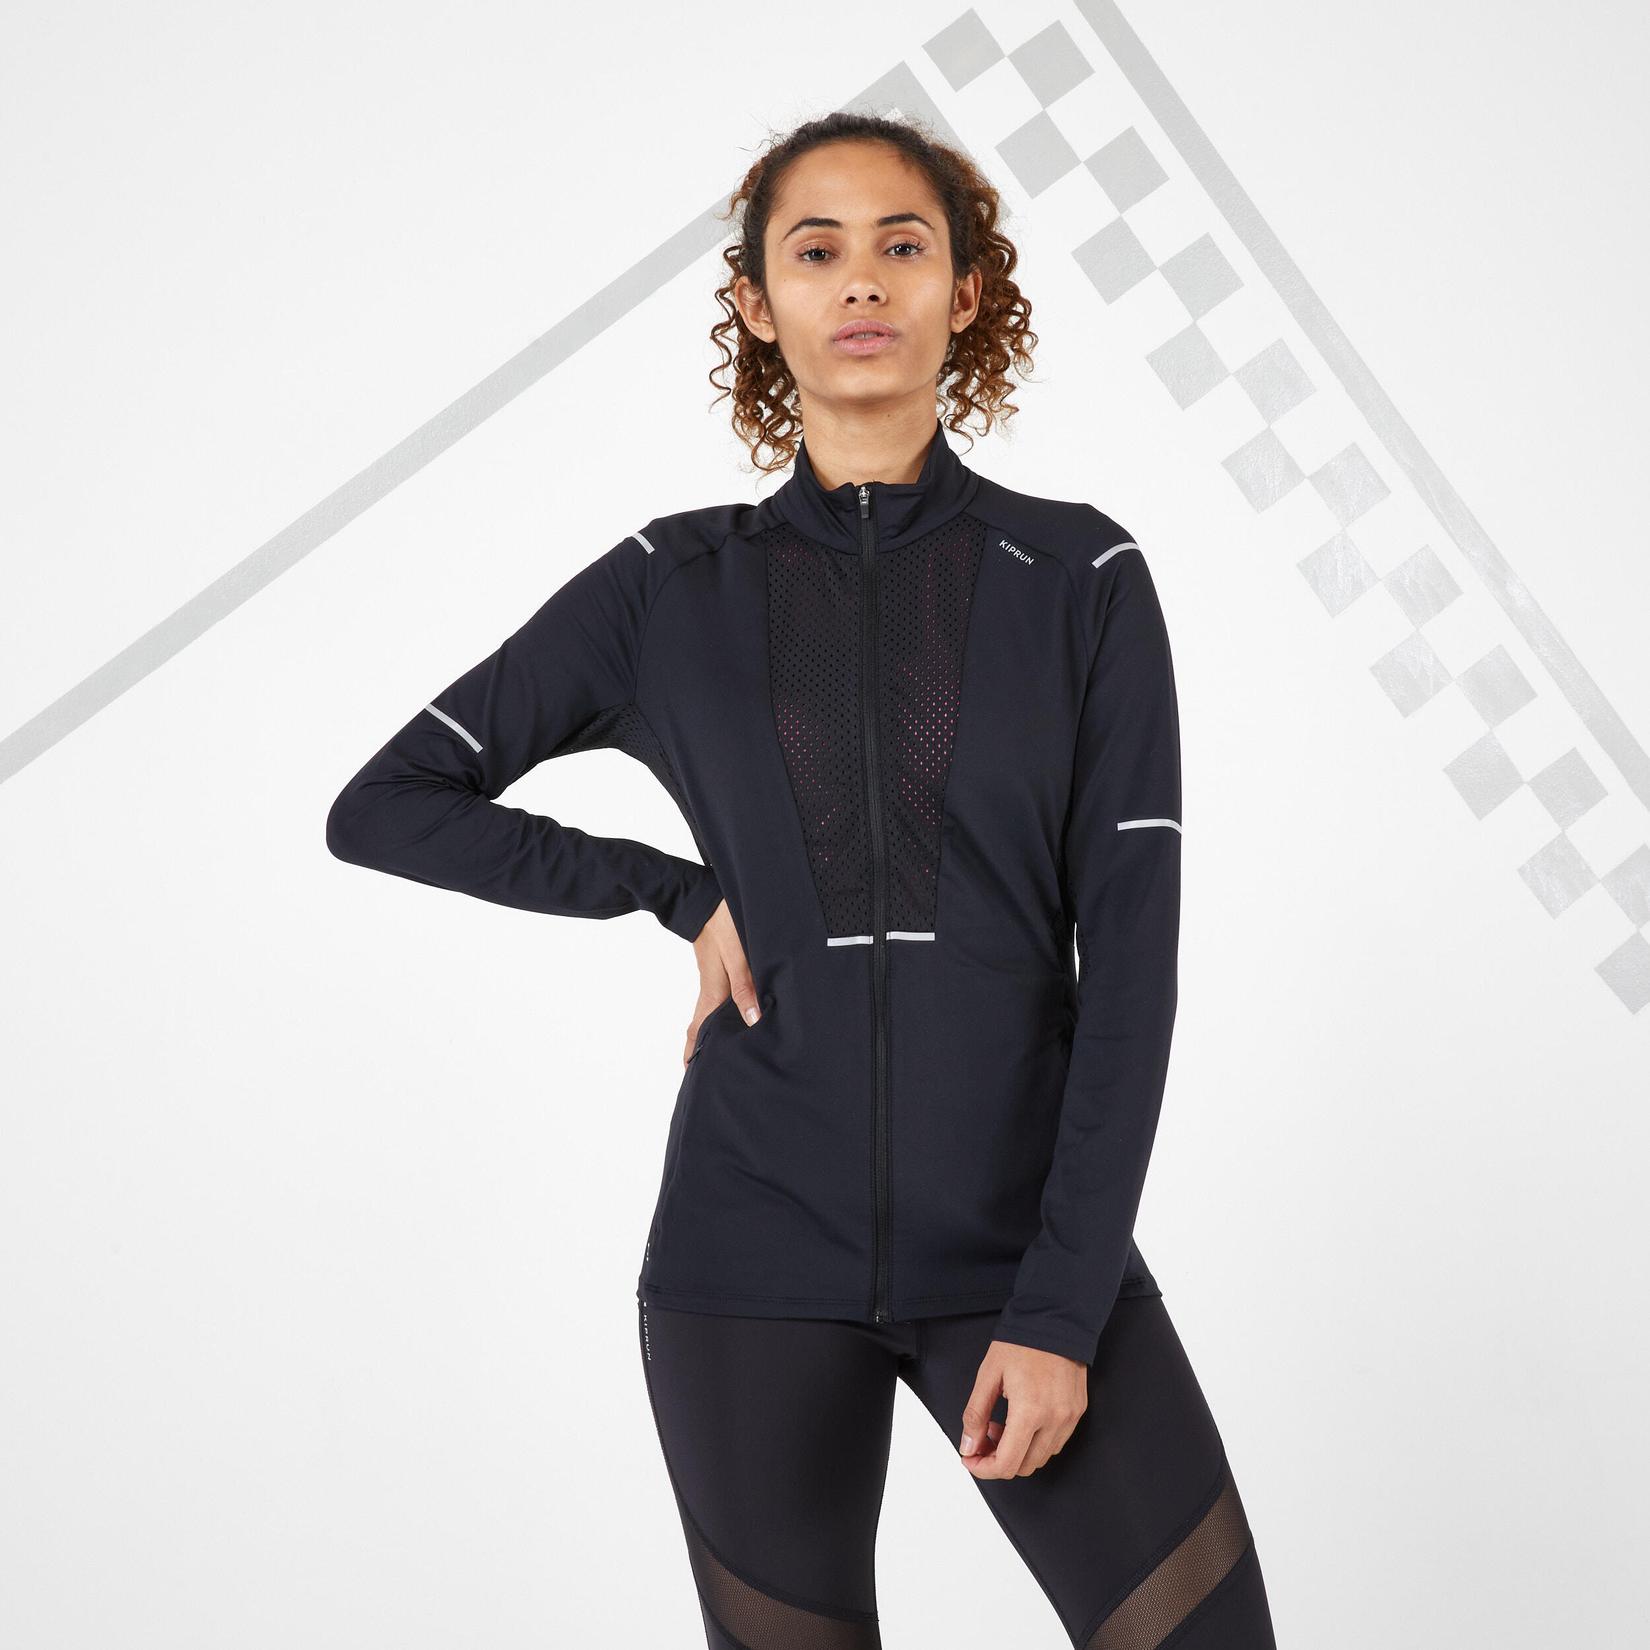 Kiprun Women's Running Breathable Jacket - black offers at R 499 in Decathlon